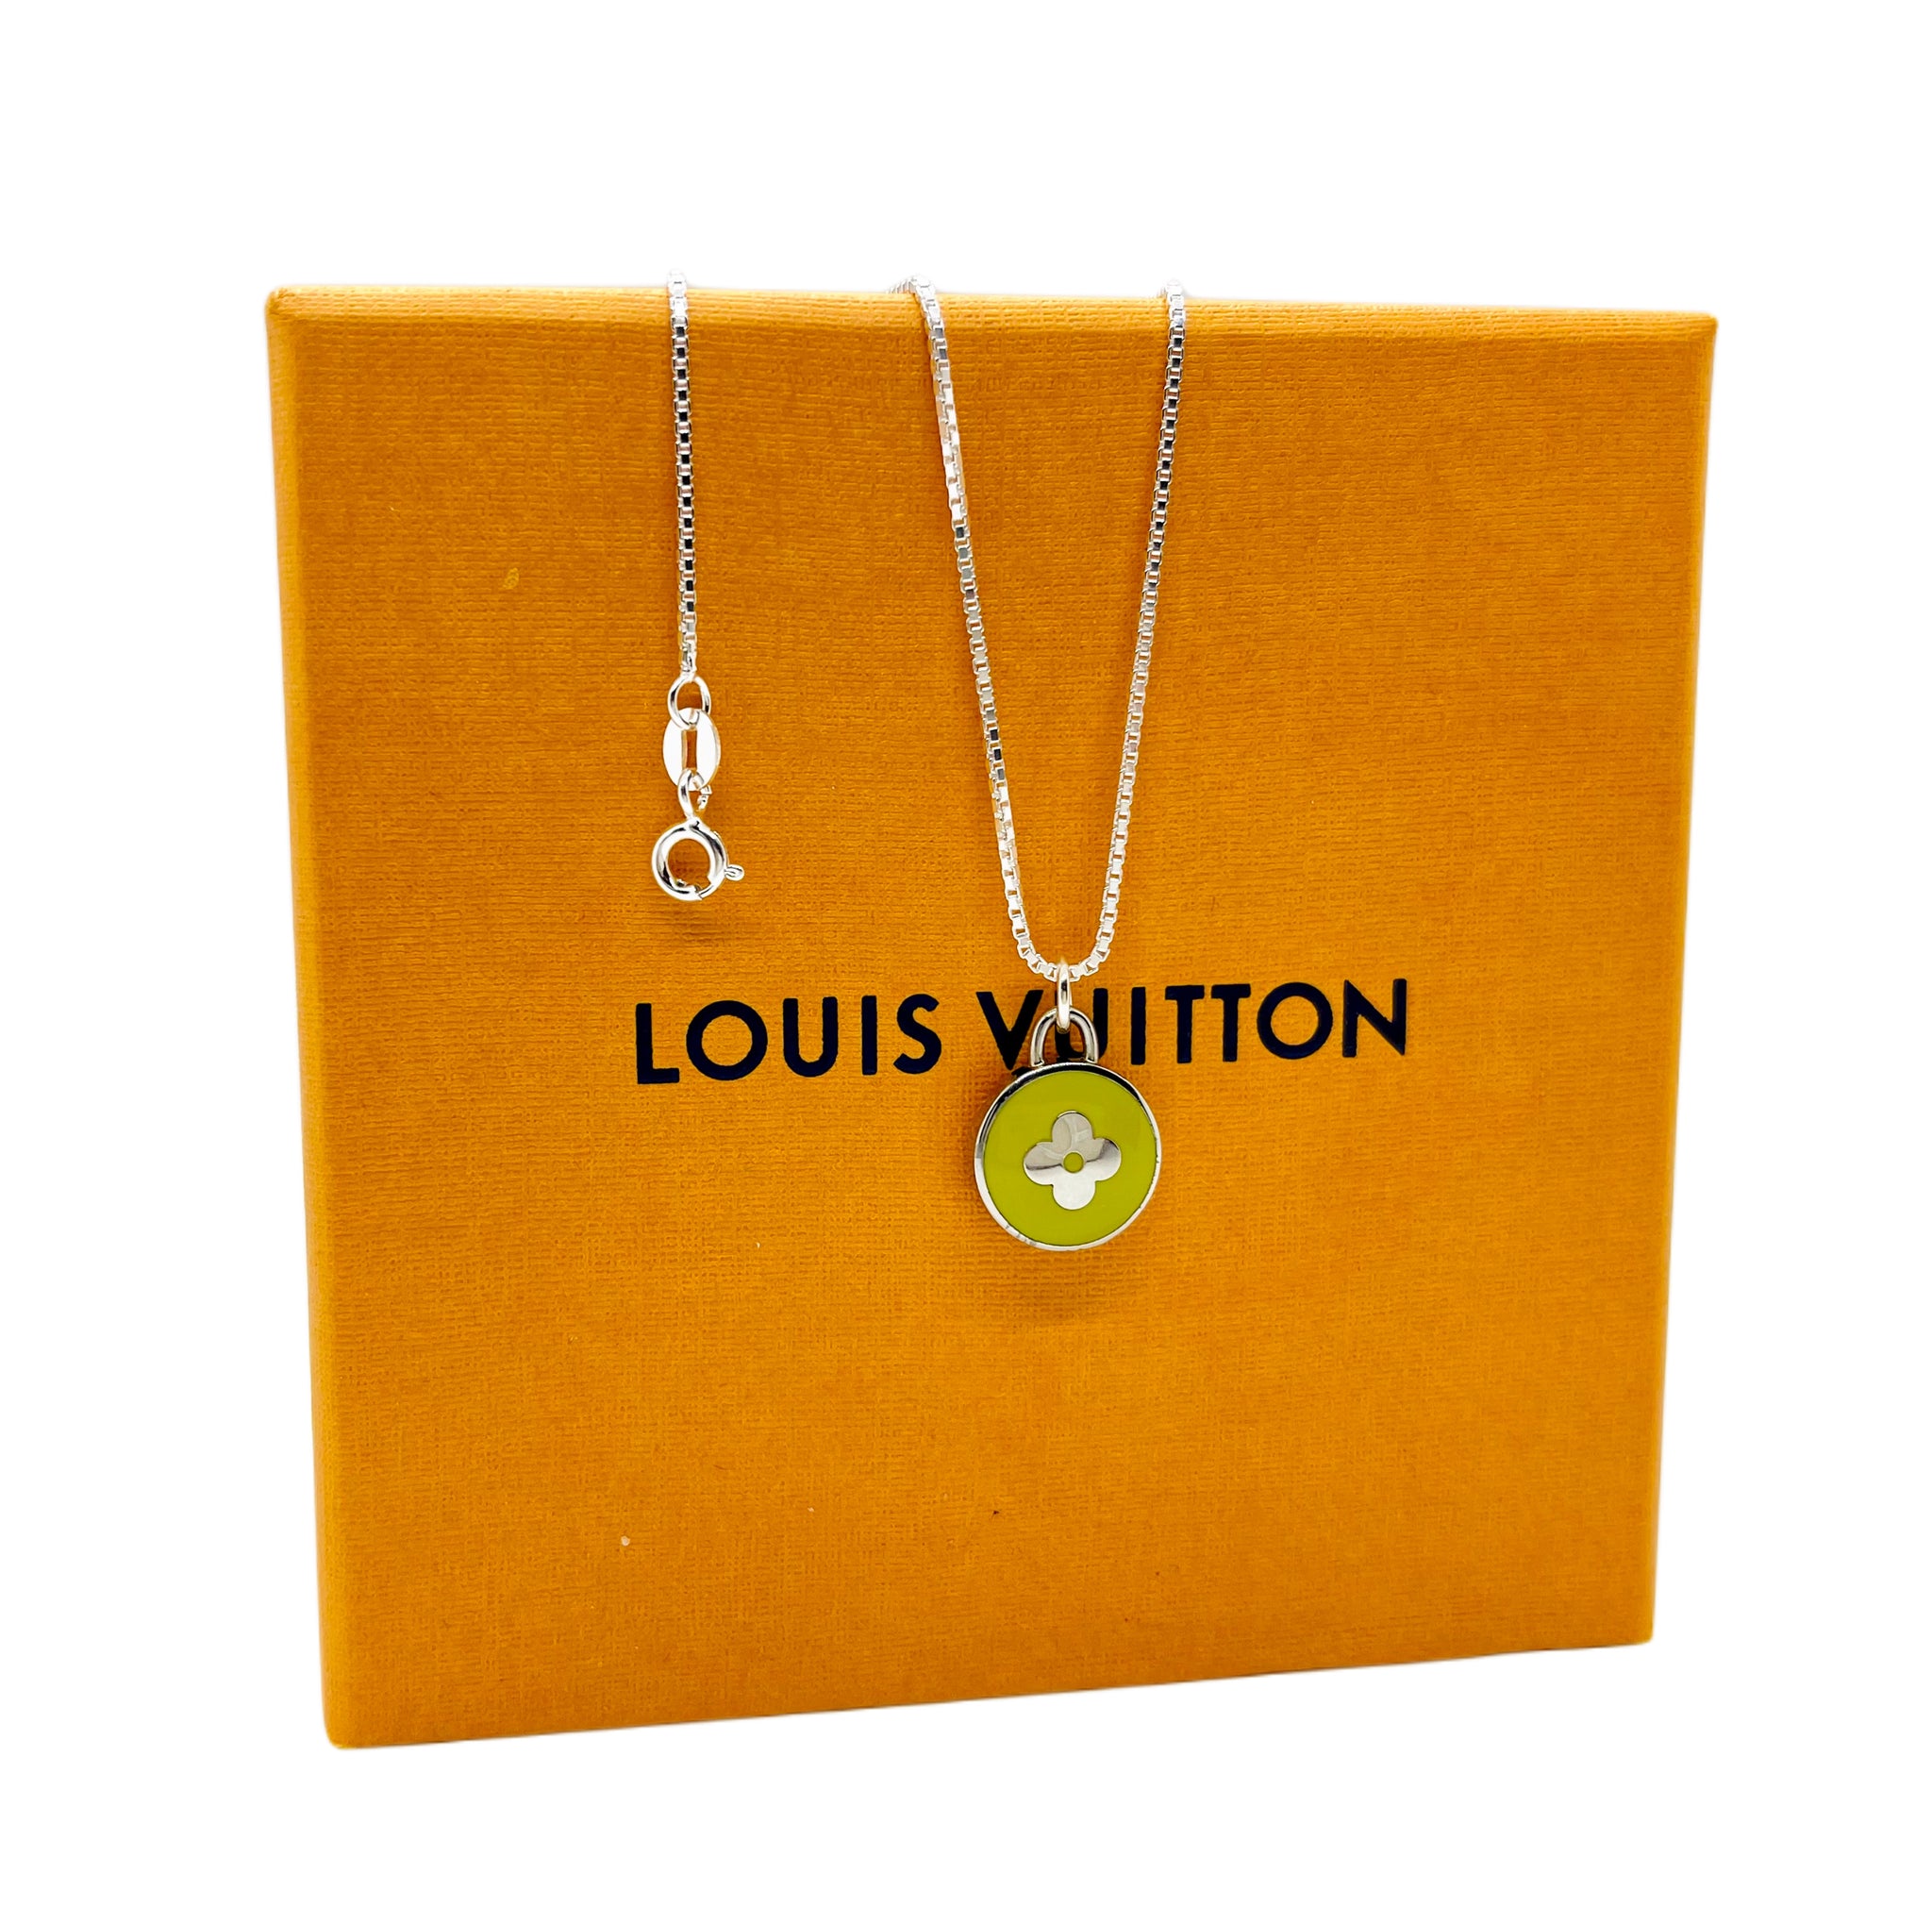 Louis Vuitton Sweet Monogram Charm Bracelet - Gold, Gold-Tone